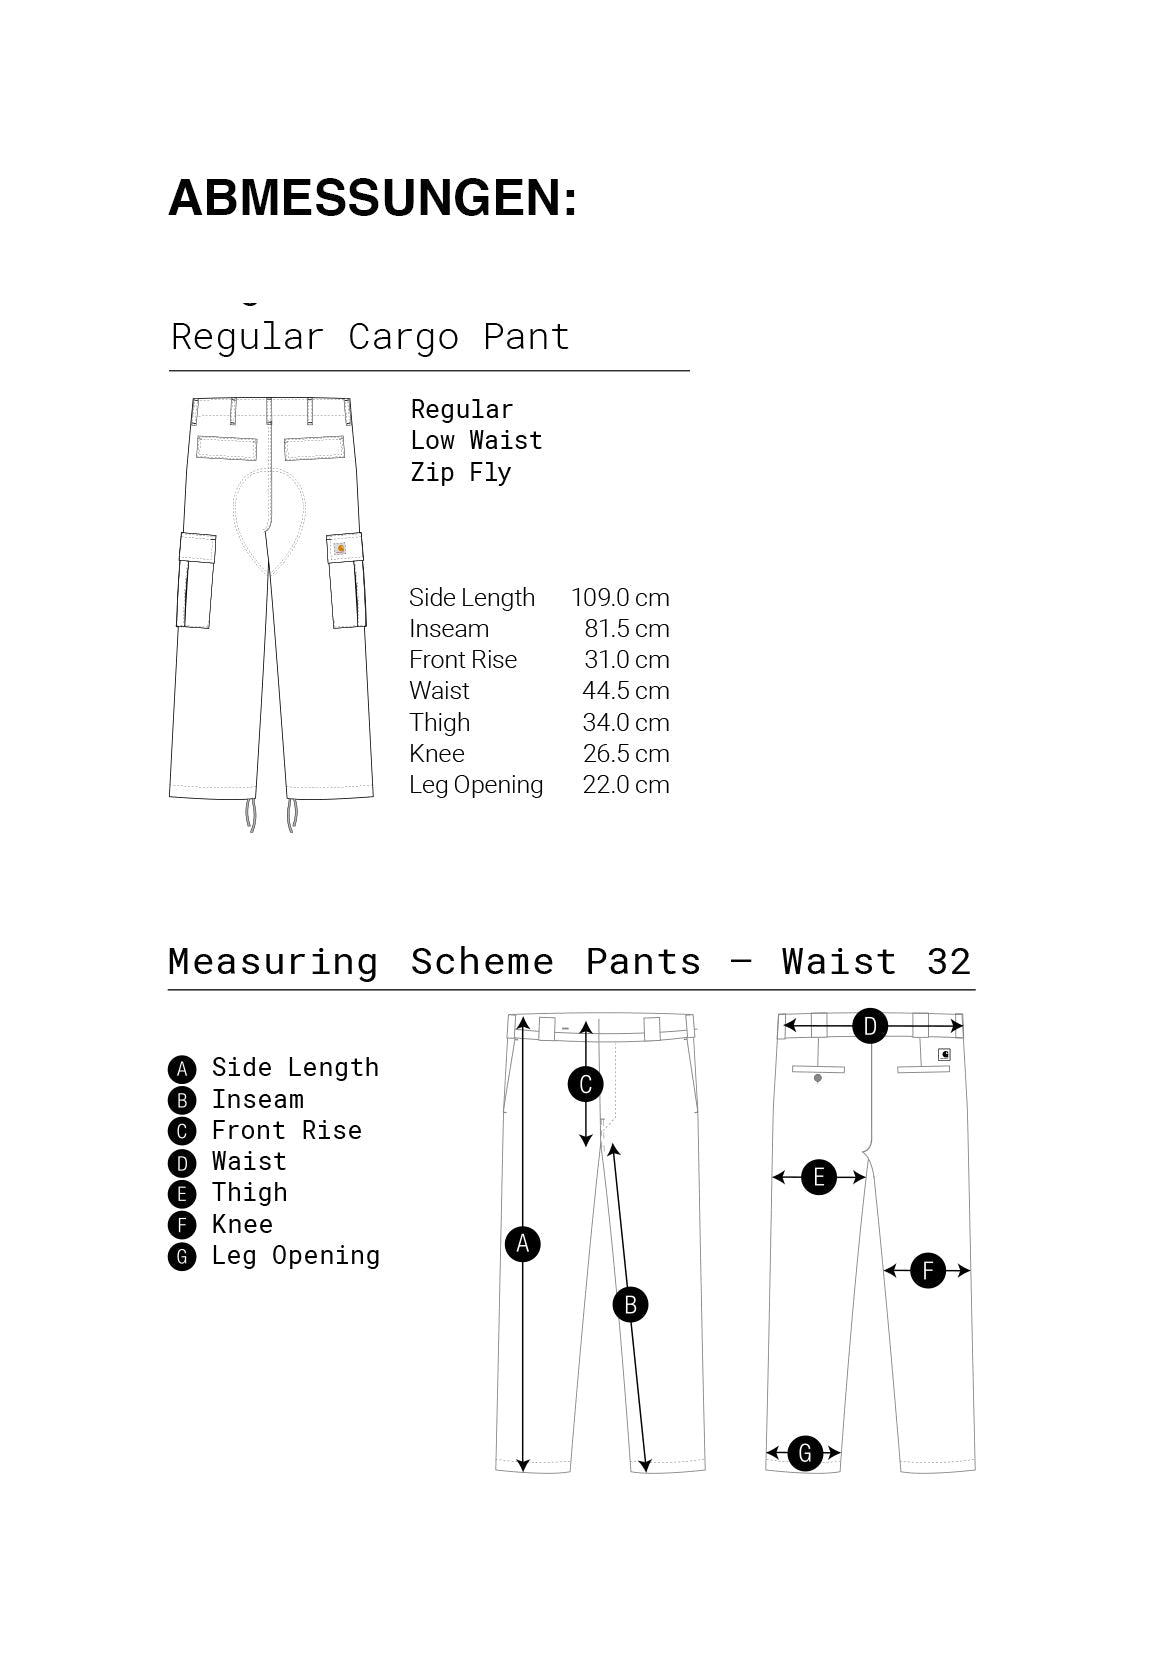 CARHARTT WIP-Regular Cargo Pant - BACKYARD